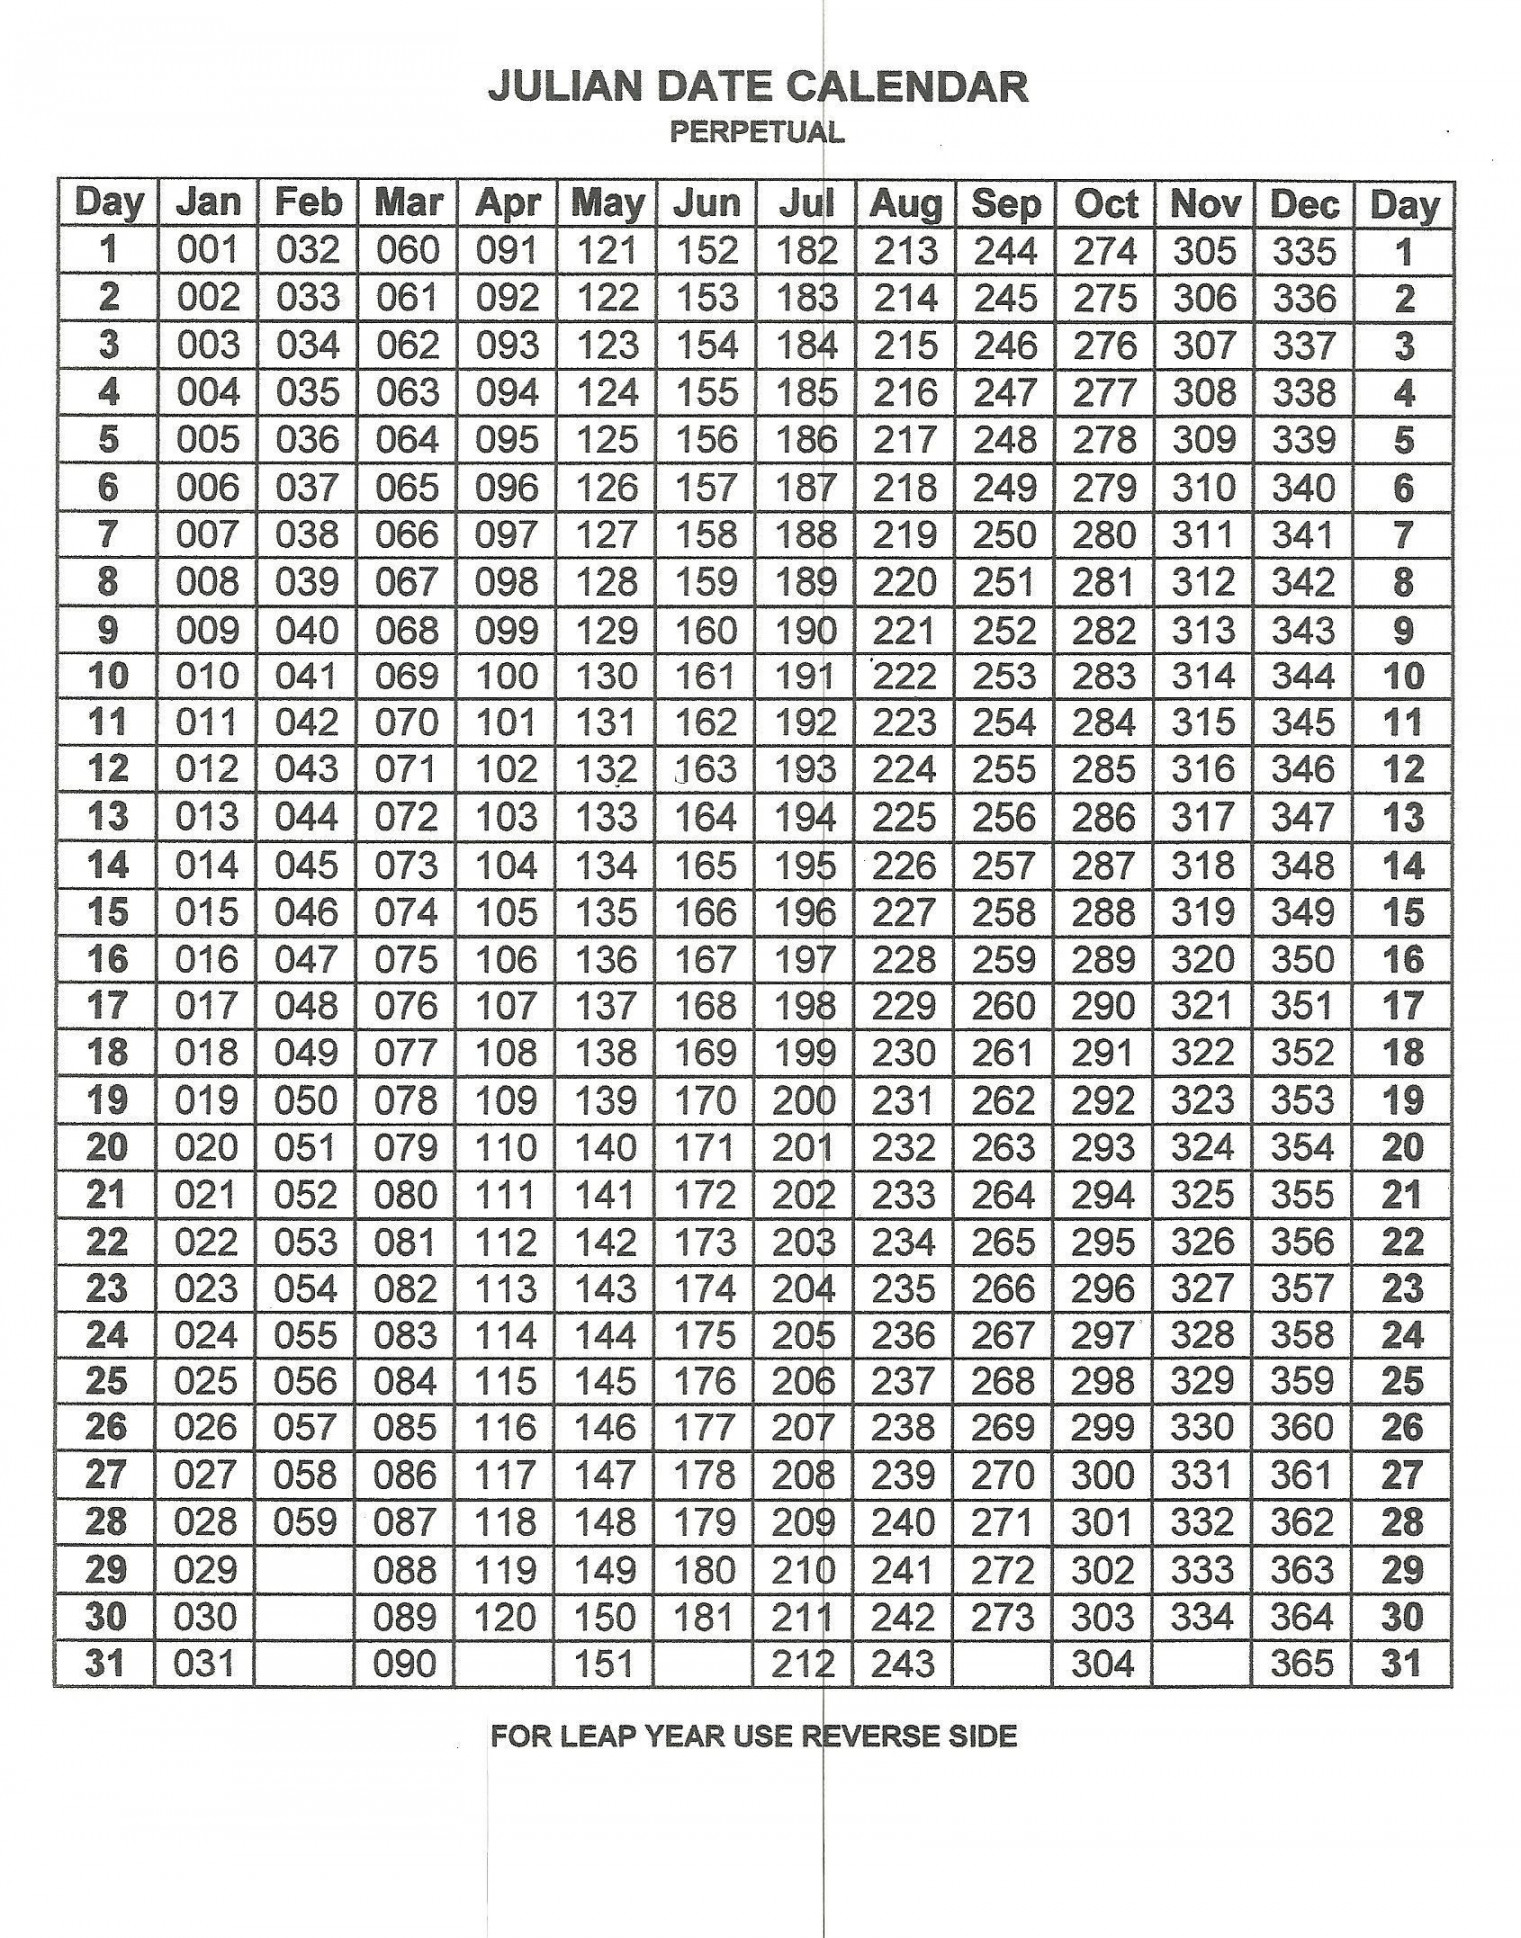 Depo-Provera Calendar From Manufacturer  Calendar printables